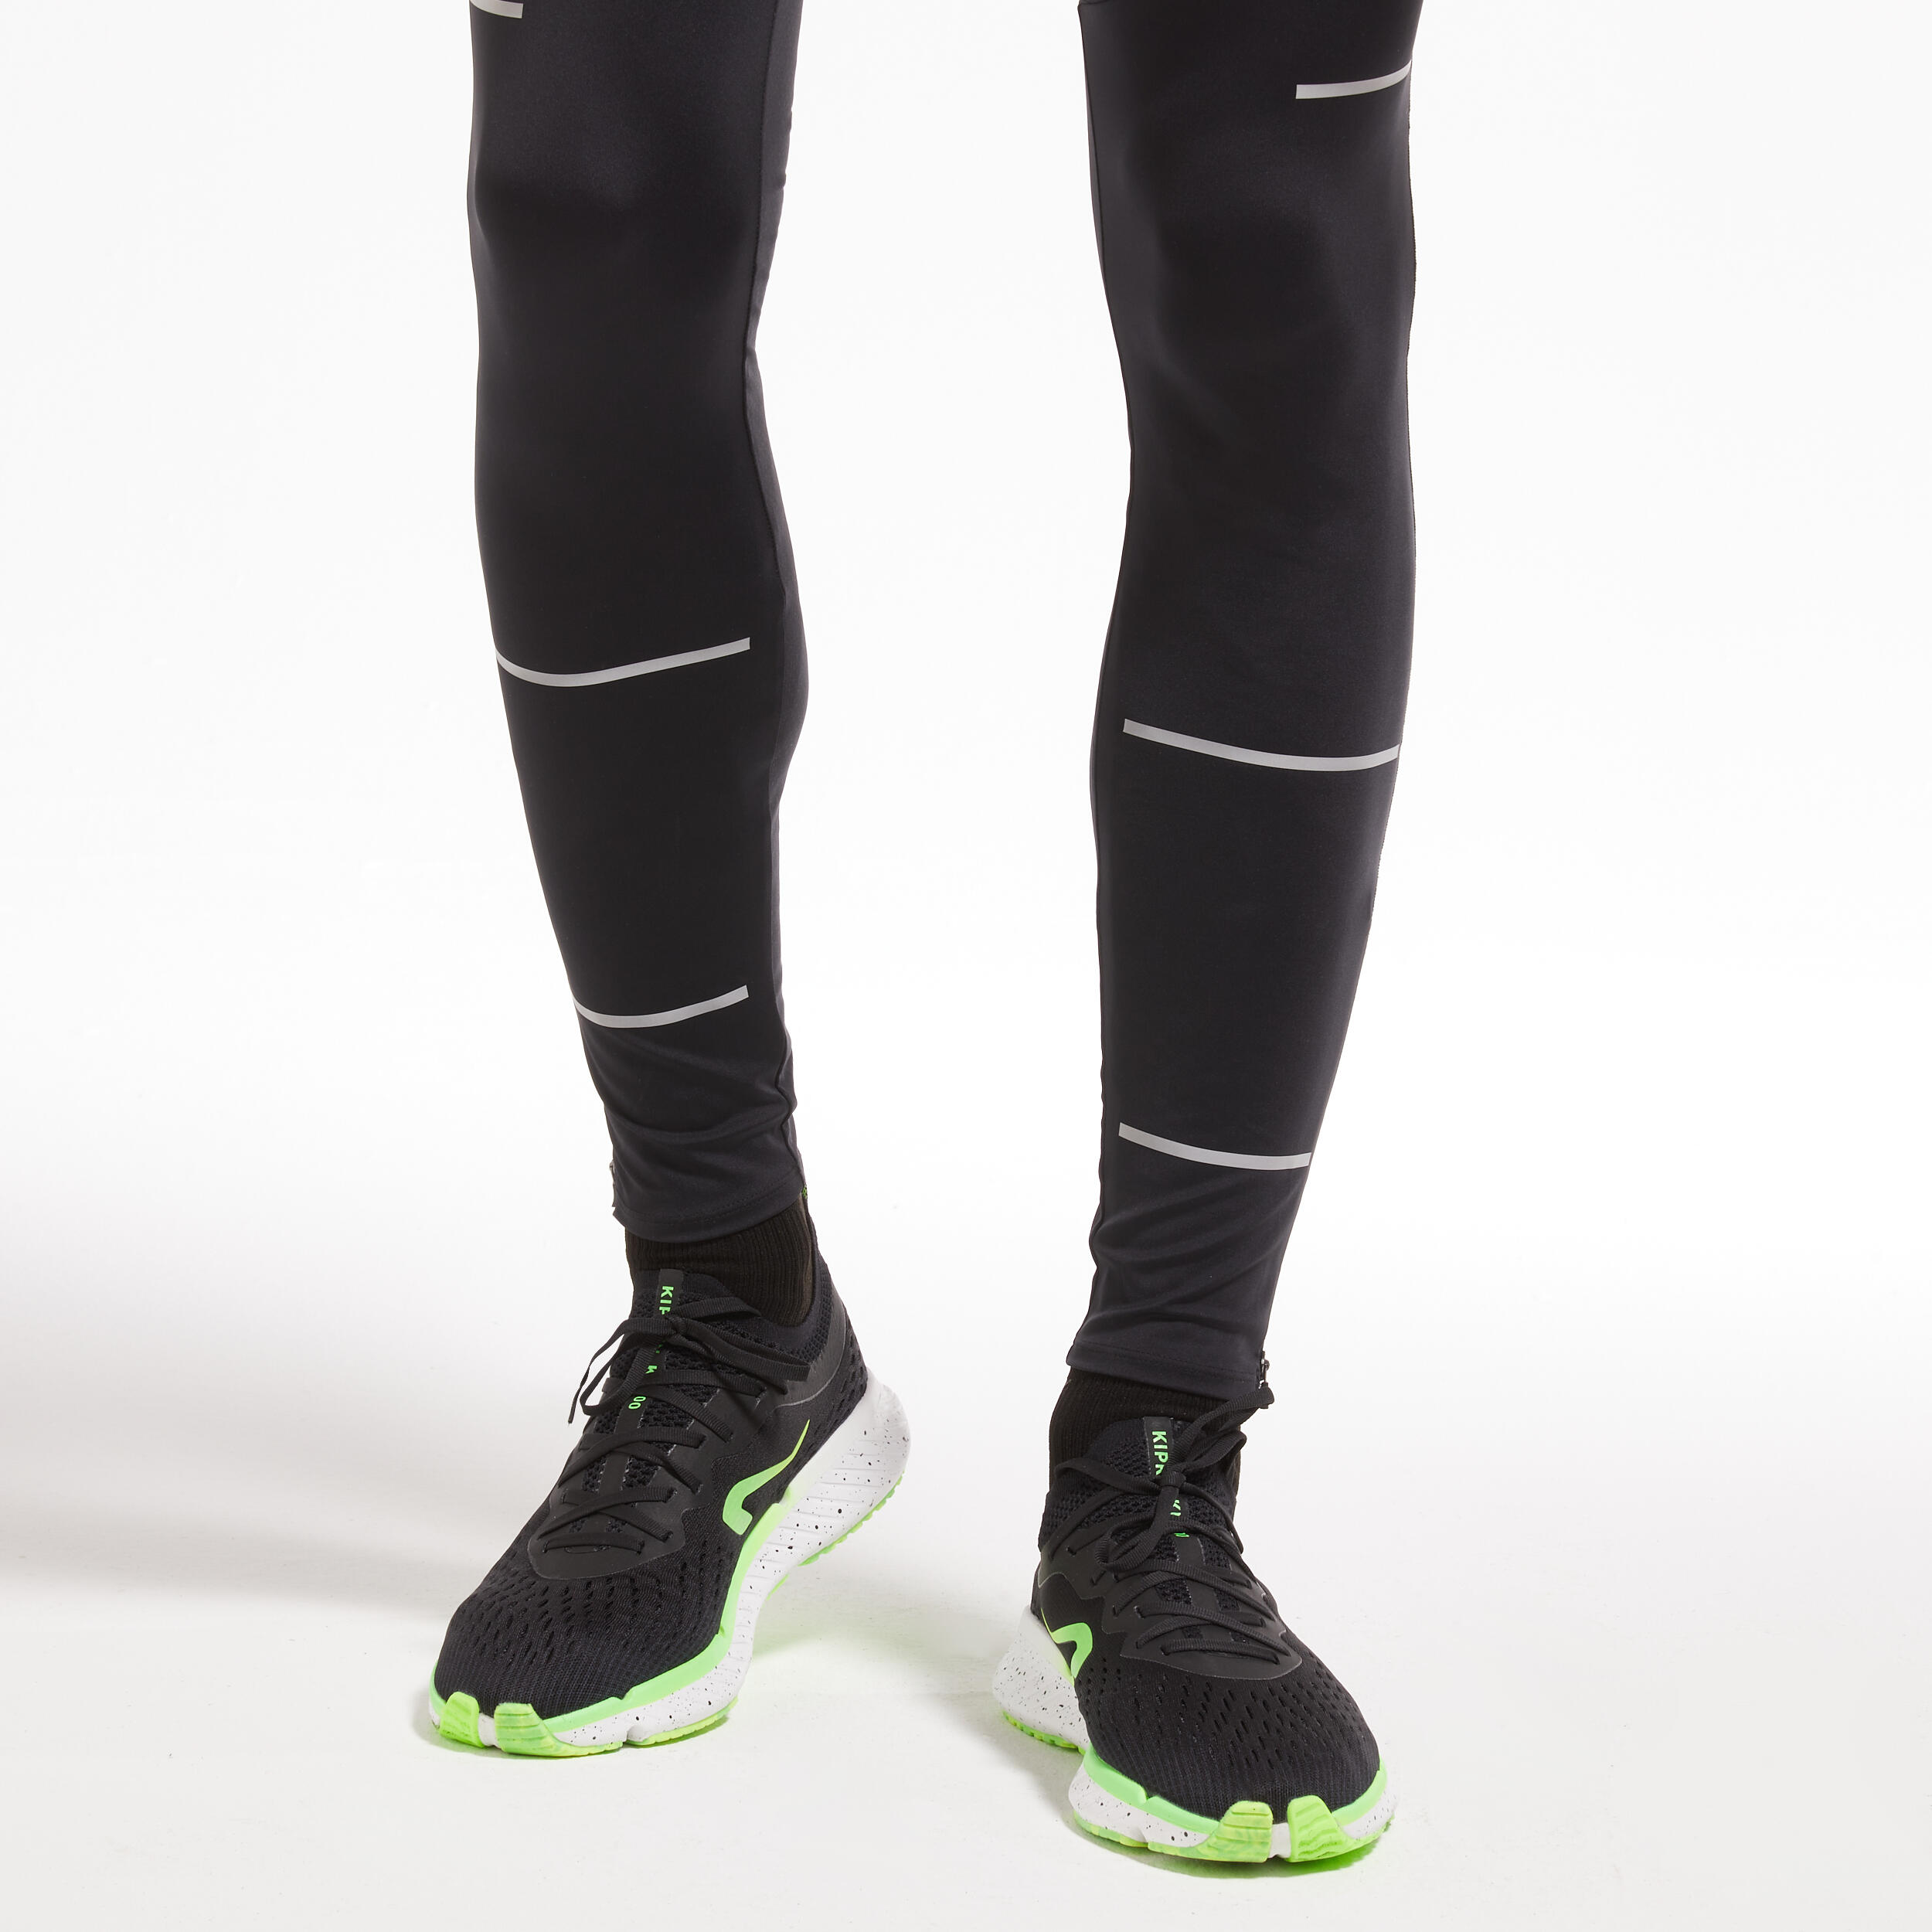 Men's Long Breathable Running Tights - Dry - Black - Kalenji - Decathlon